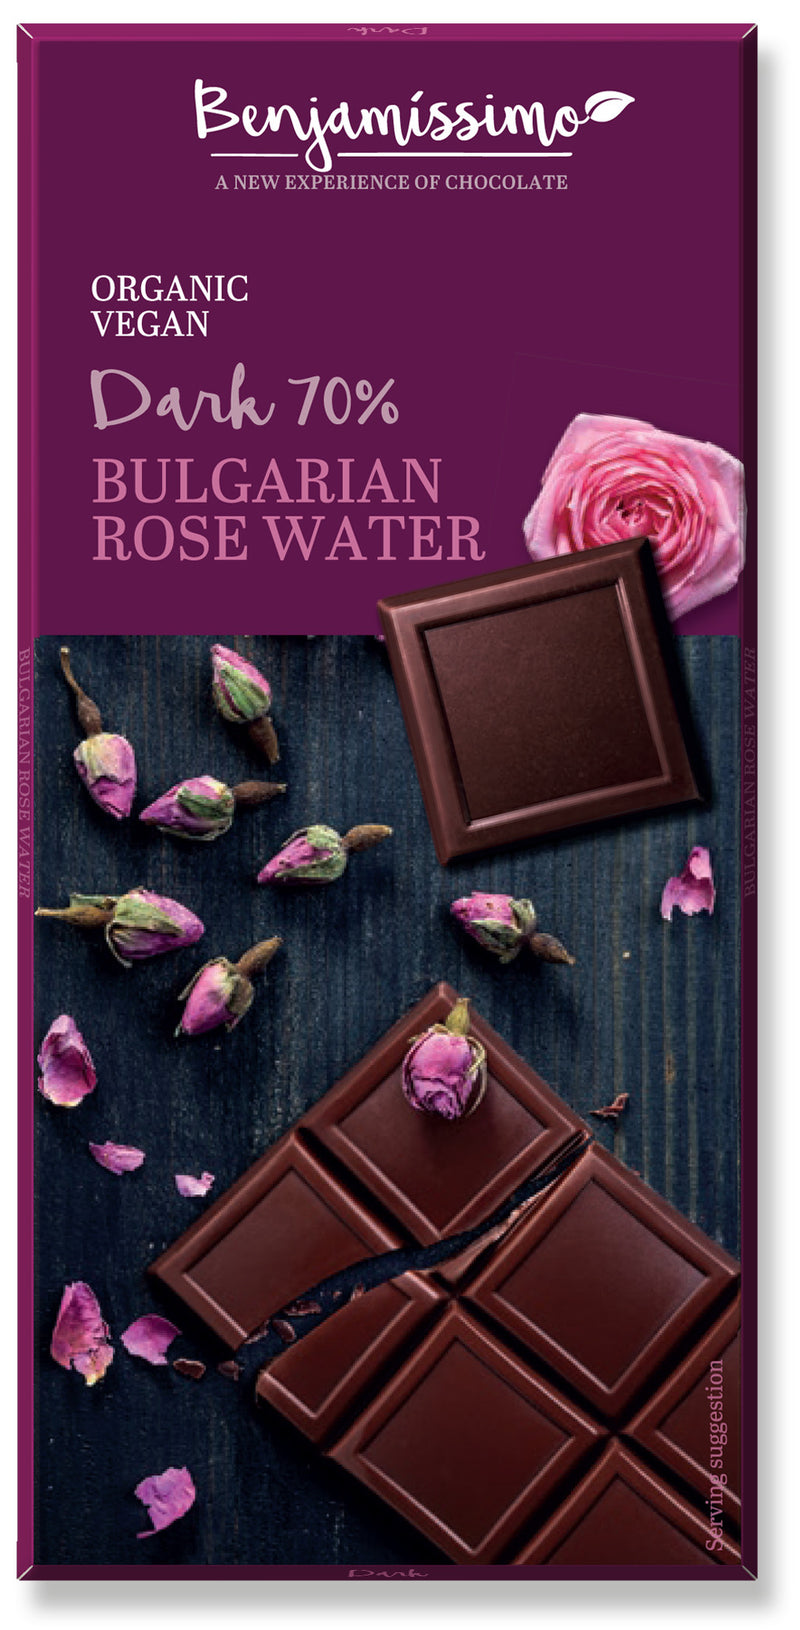 Ciocolata cu apa de trandafir, bio, 70g, Benjamissimo                                                 1